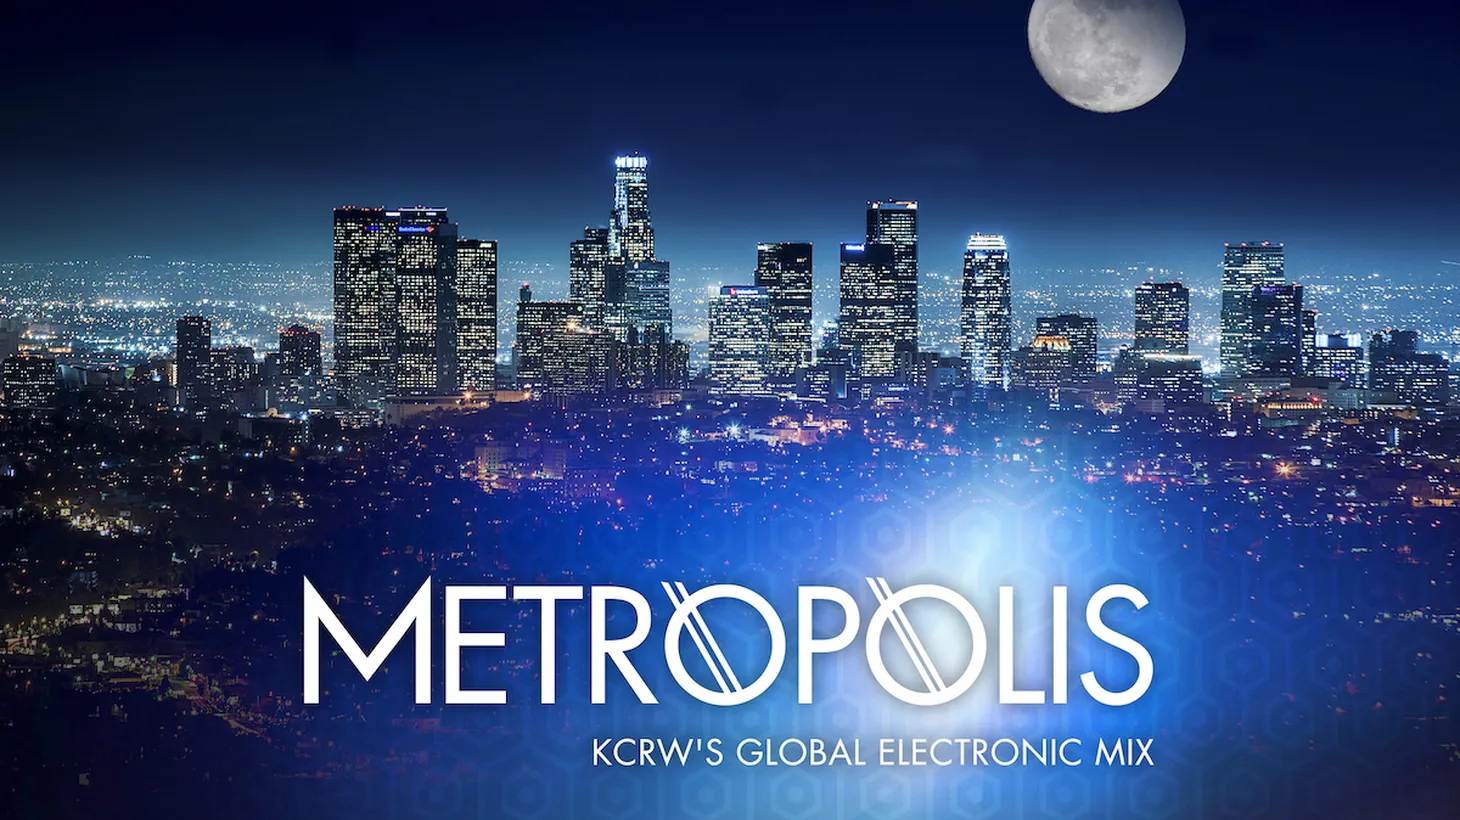 Metropolis playlist, November 7, 2020